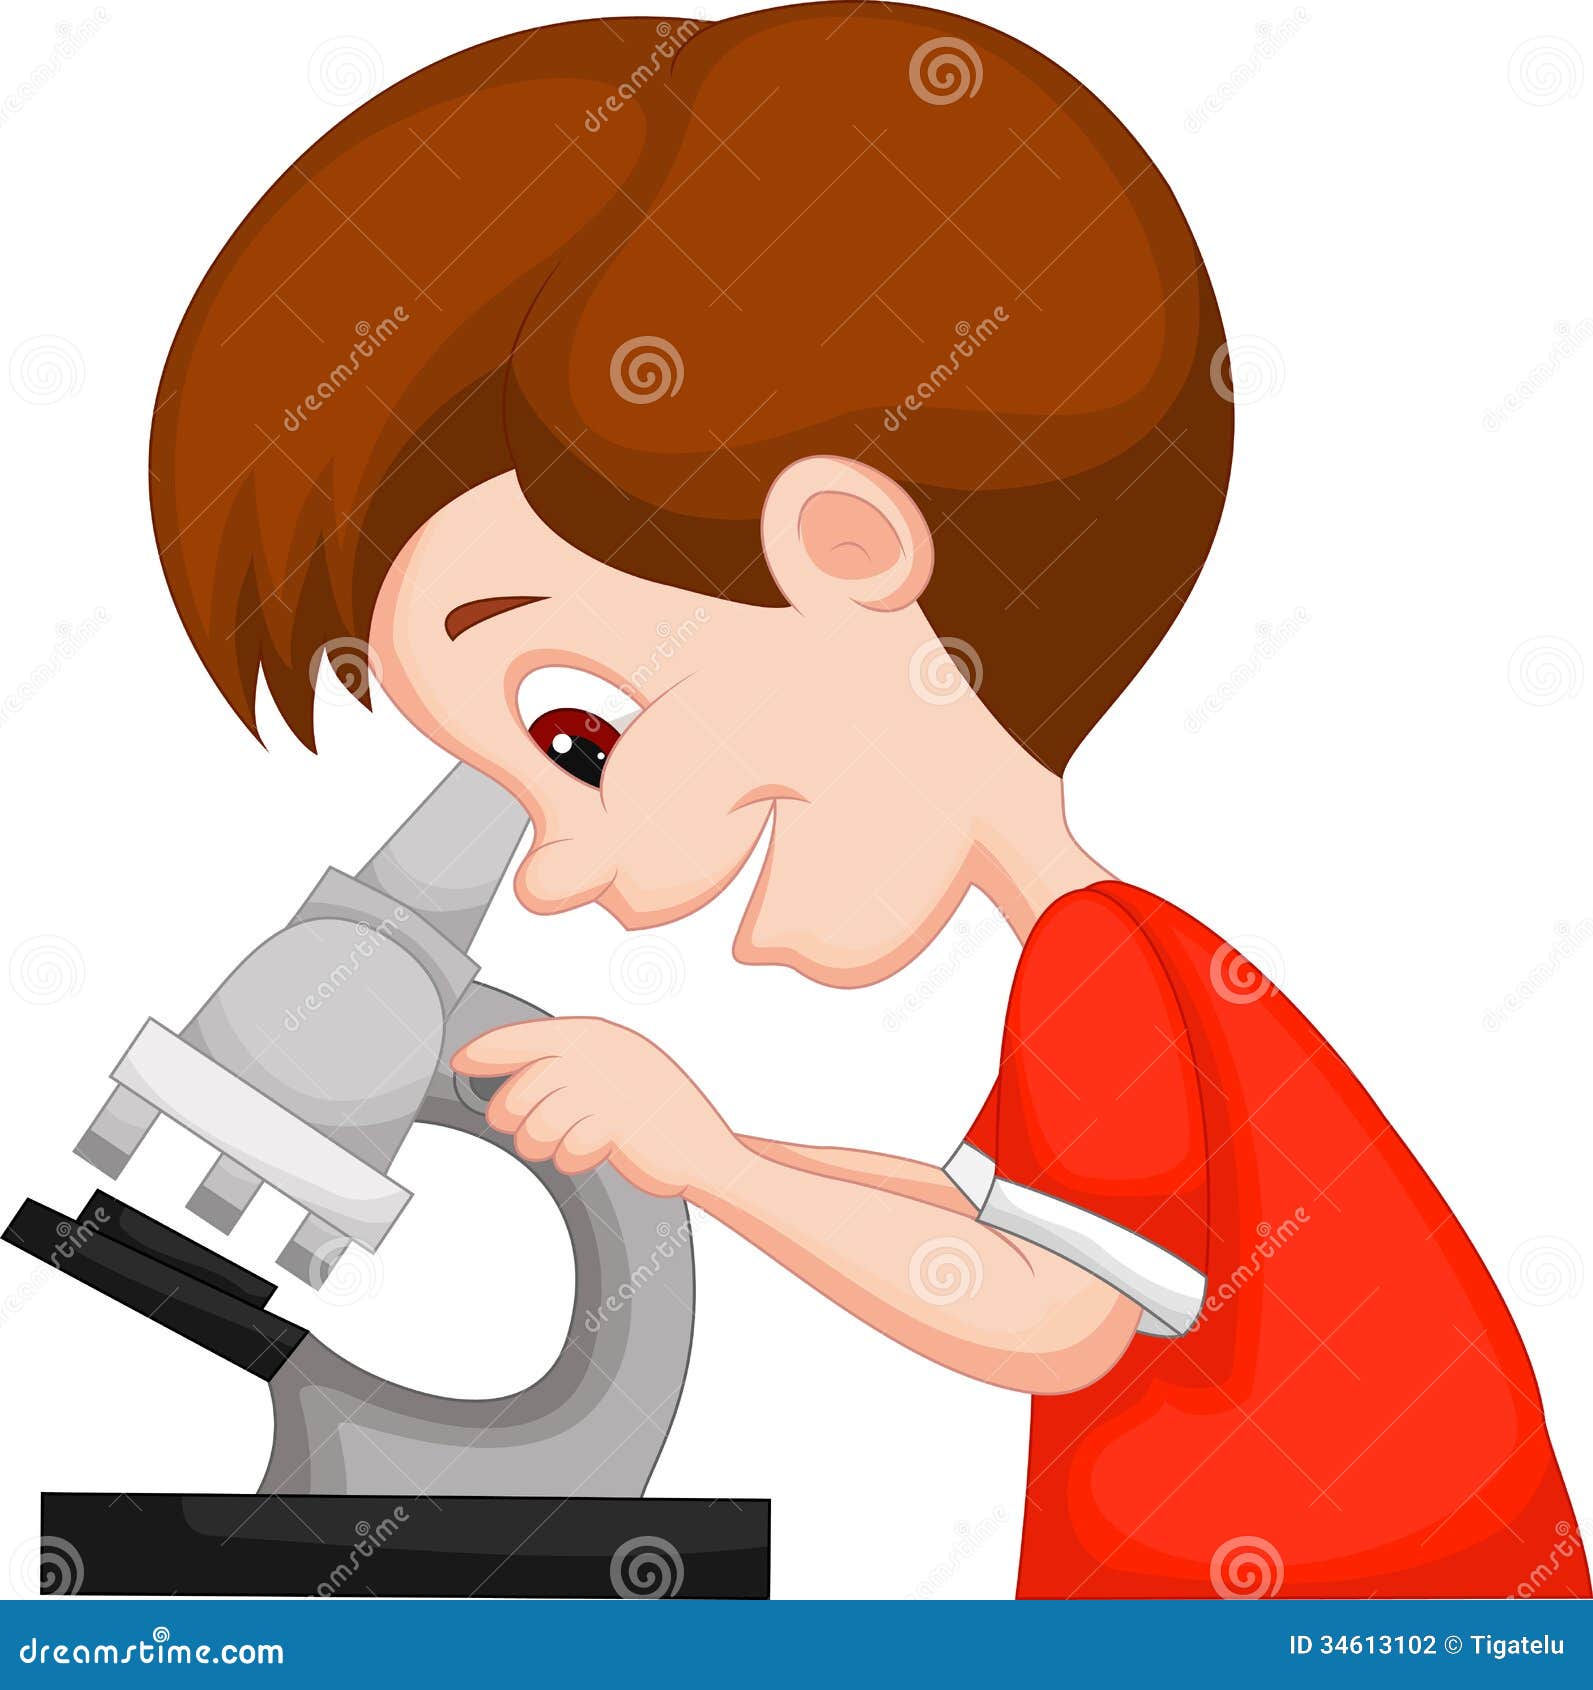 young boy cartoon using microscope